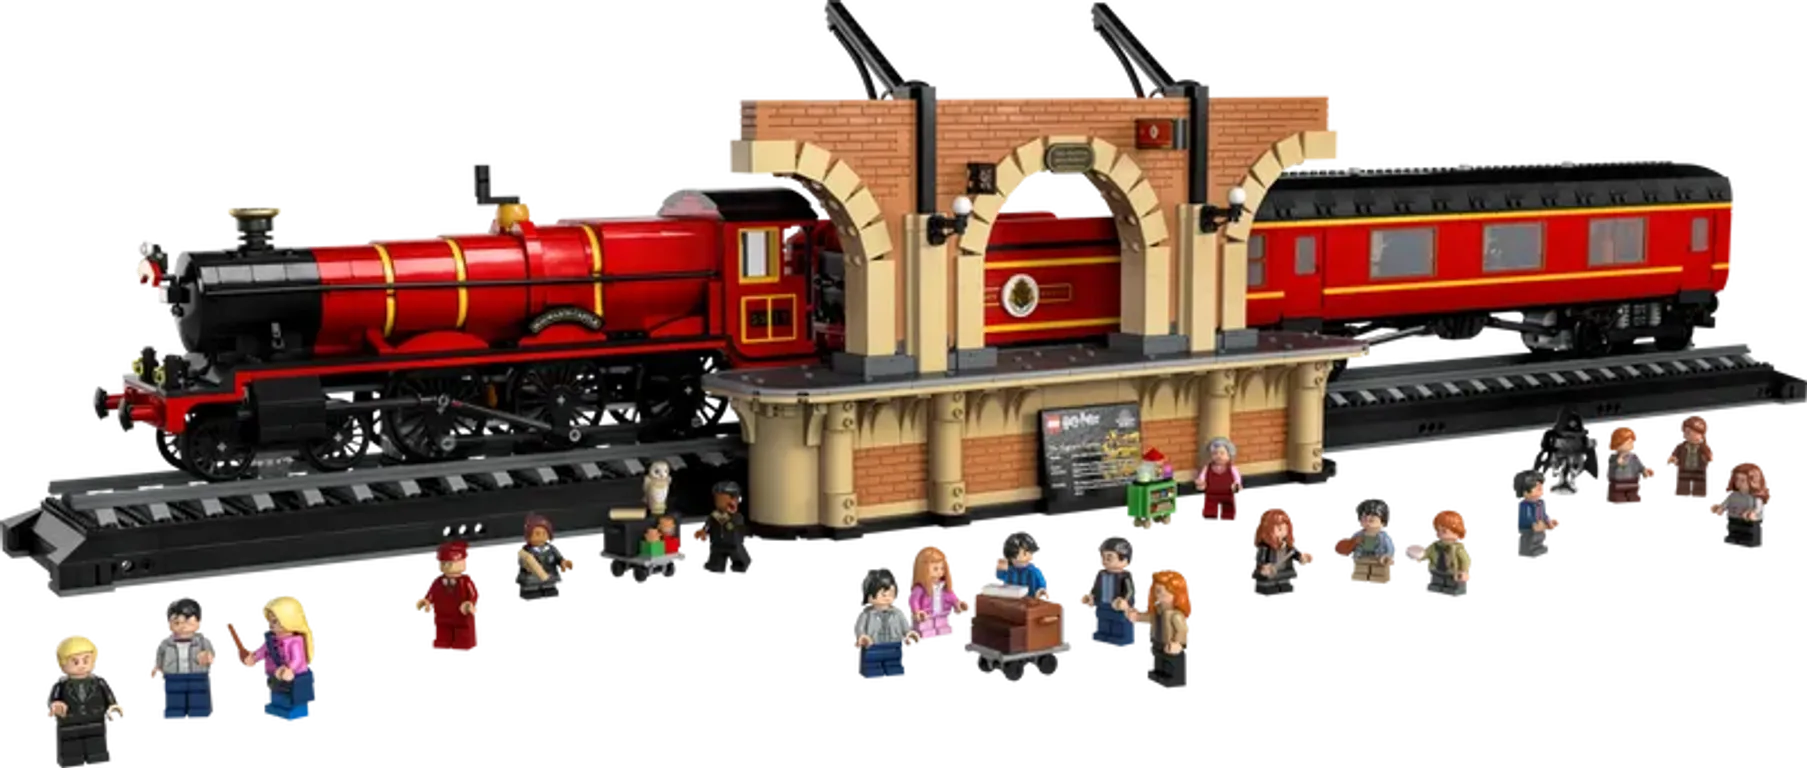 LEGO® Harry Potter™ Hogwarts Express™ – Collectors' Edition components